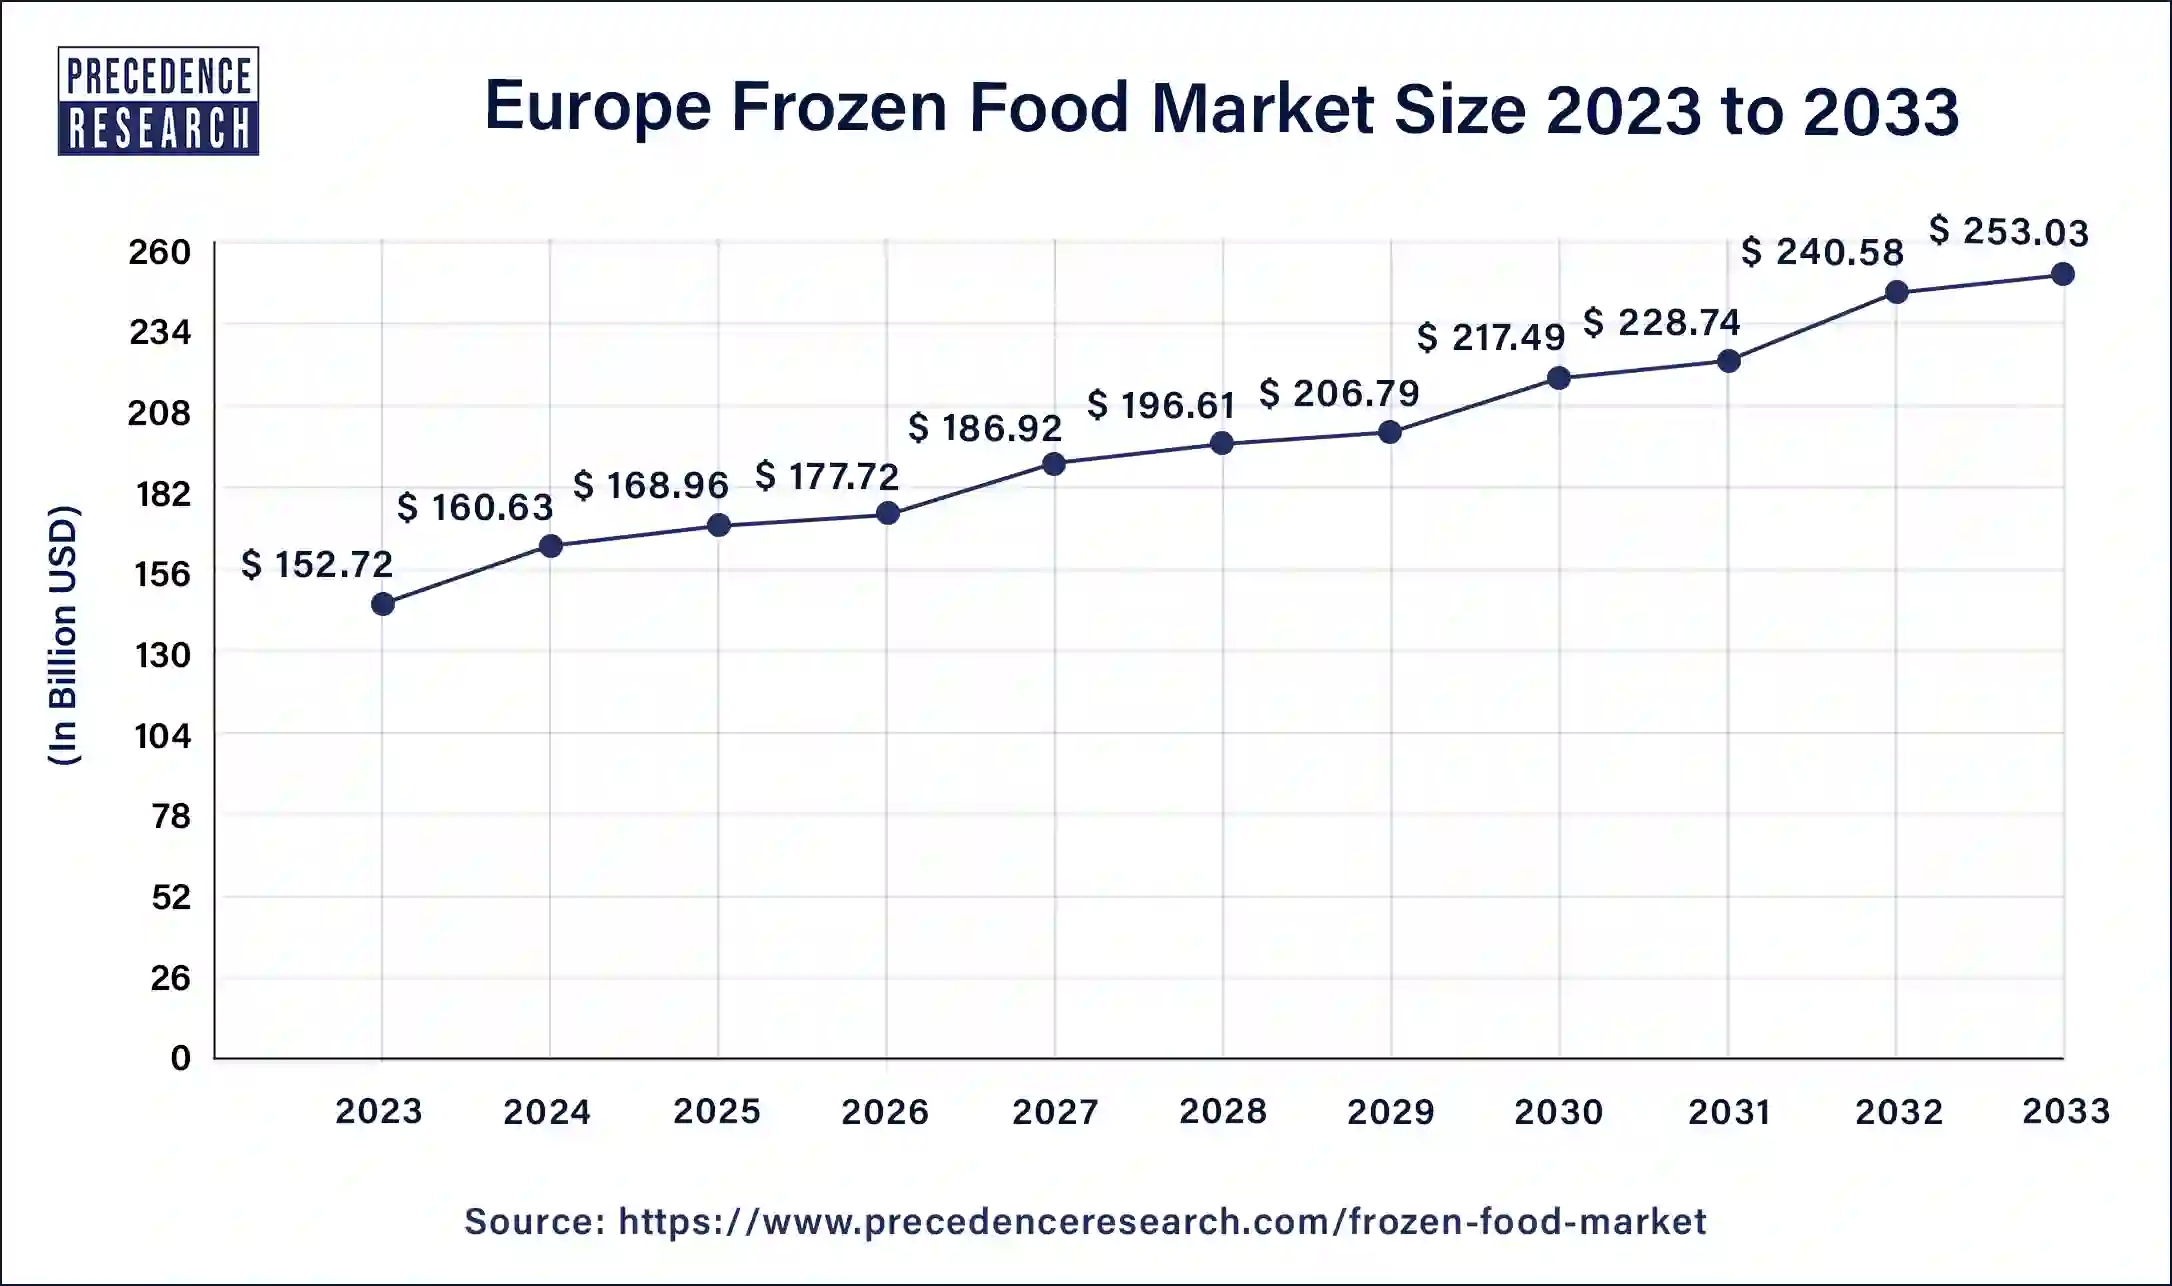 Europe Frozen Food Market Size 2024 to 2033